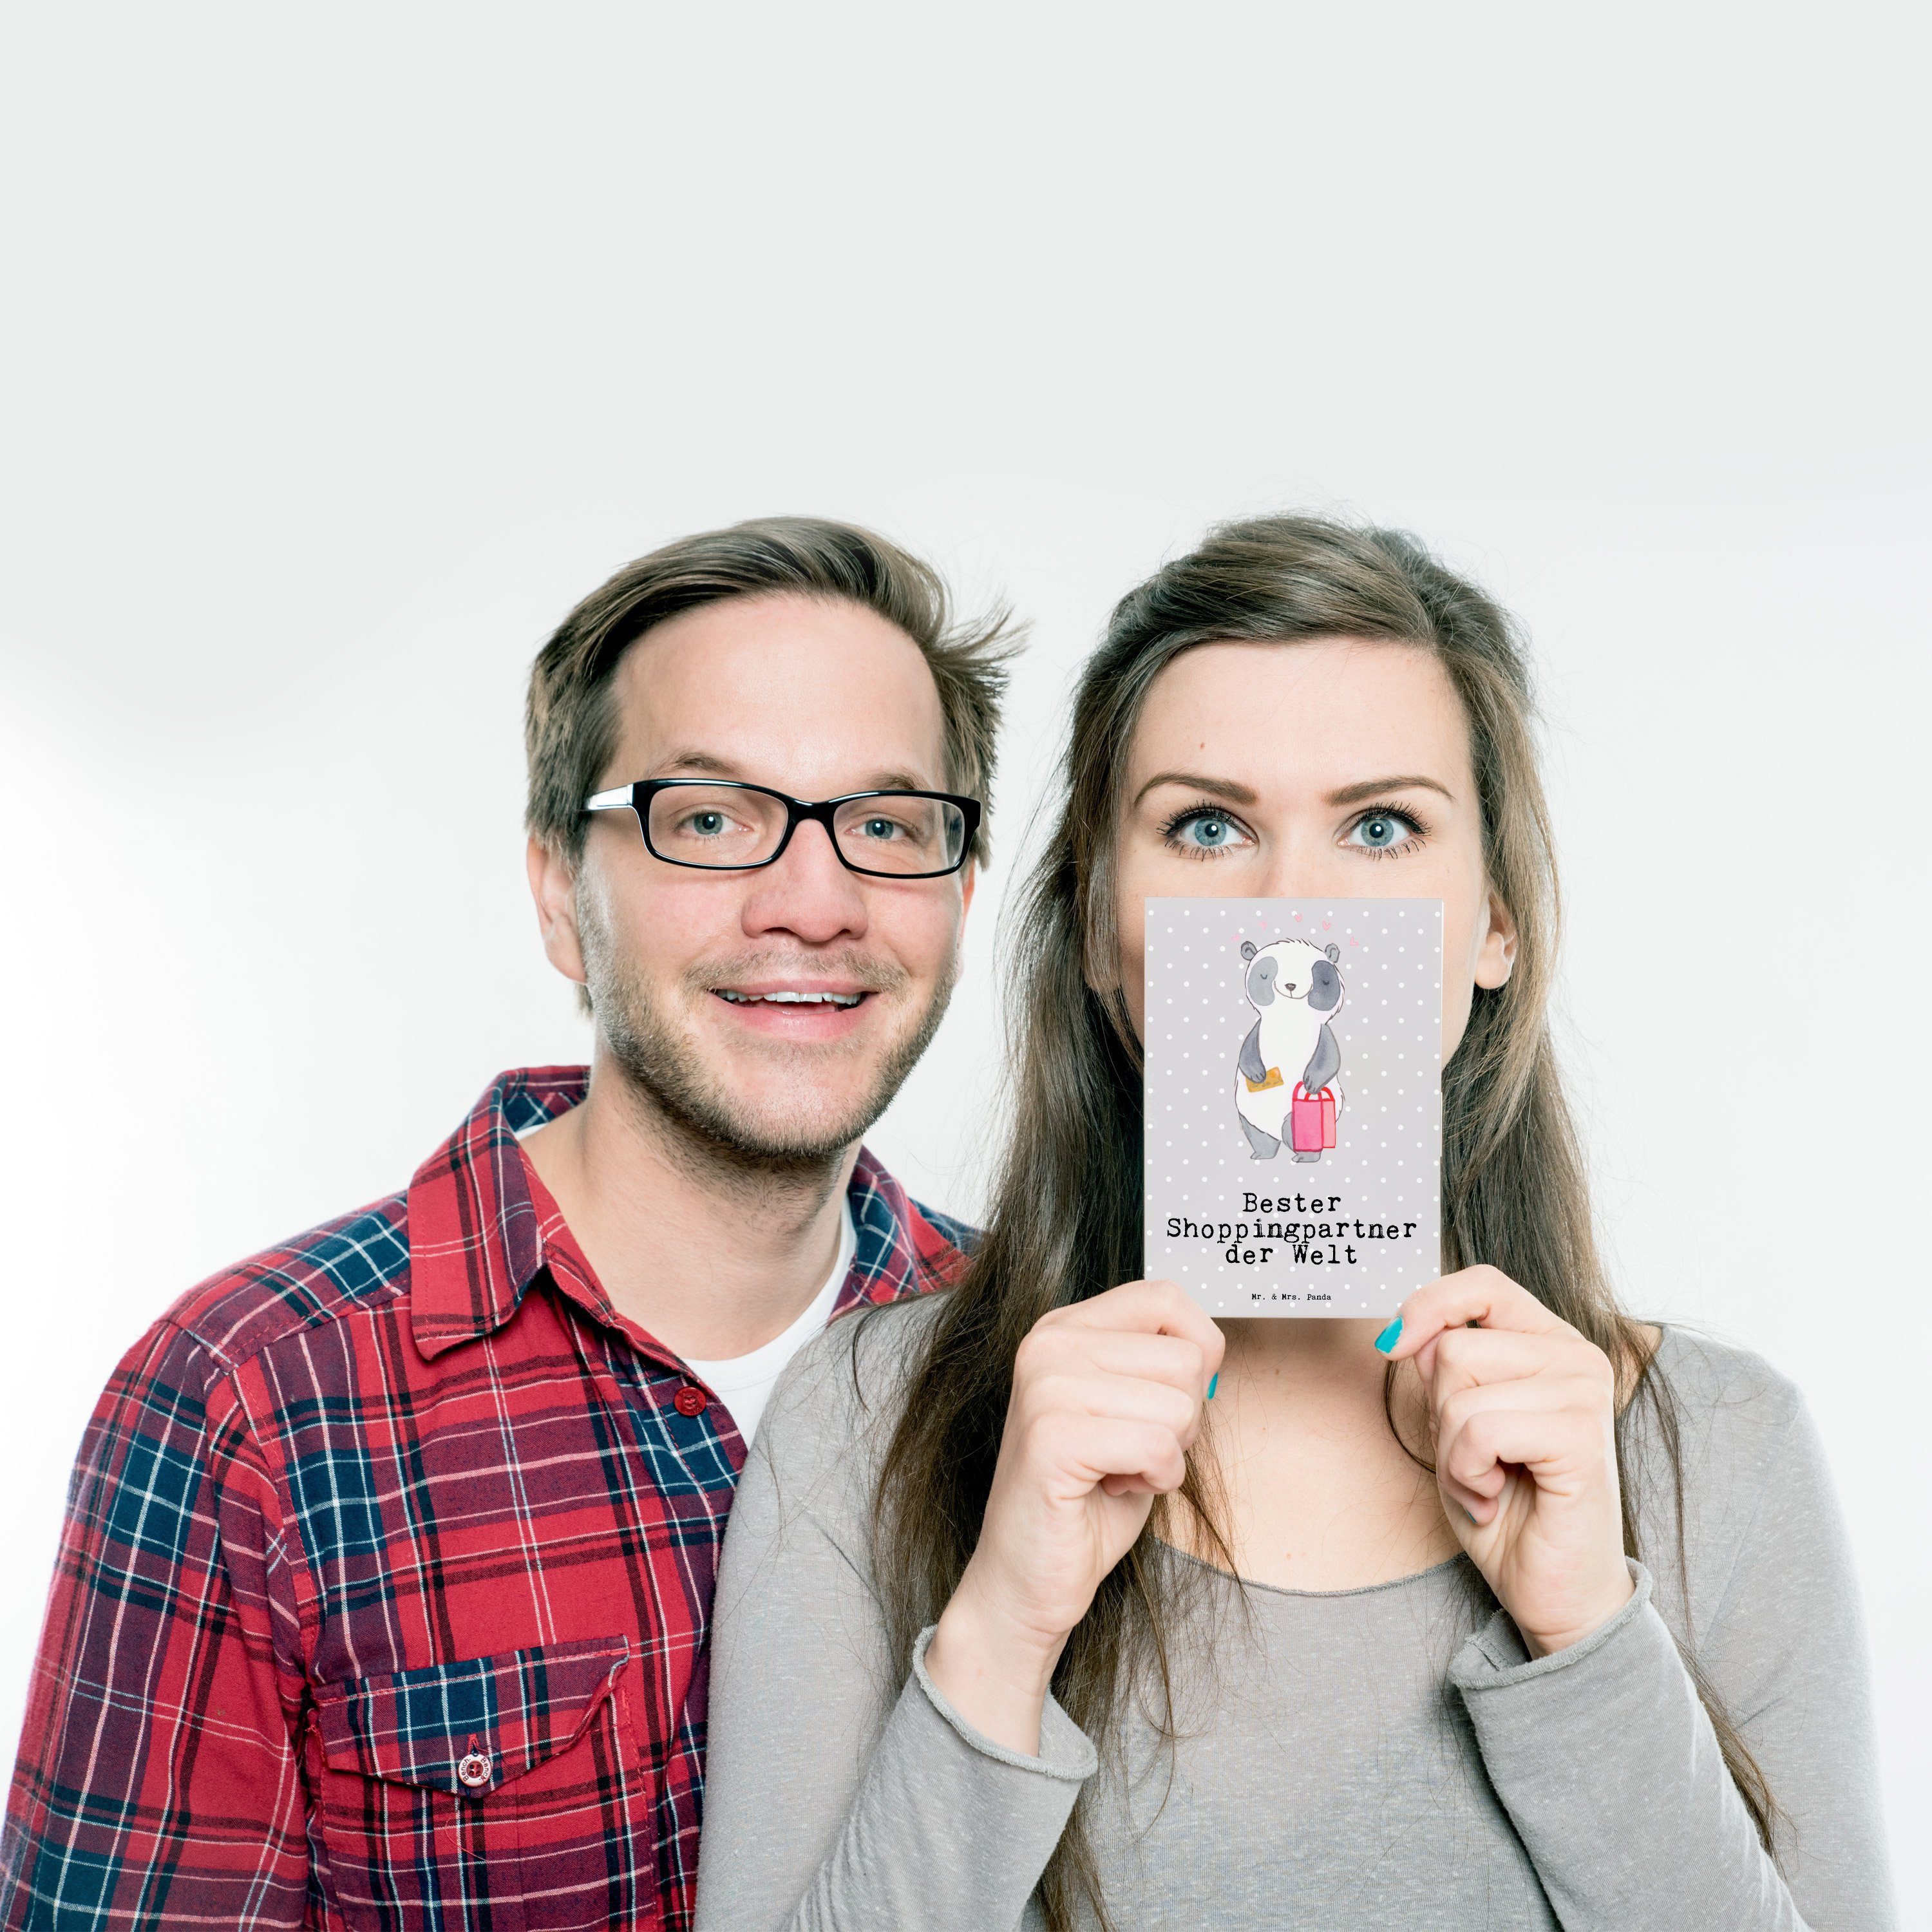 Mr. & Mrs. Panda Geschenk, Ansi - Shoppingpartner der Grau - Panda Bester Postkarte Welt Pastell